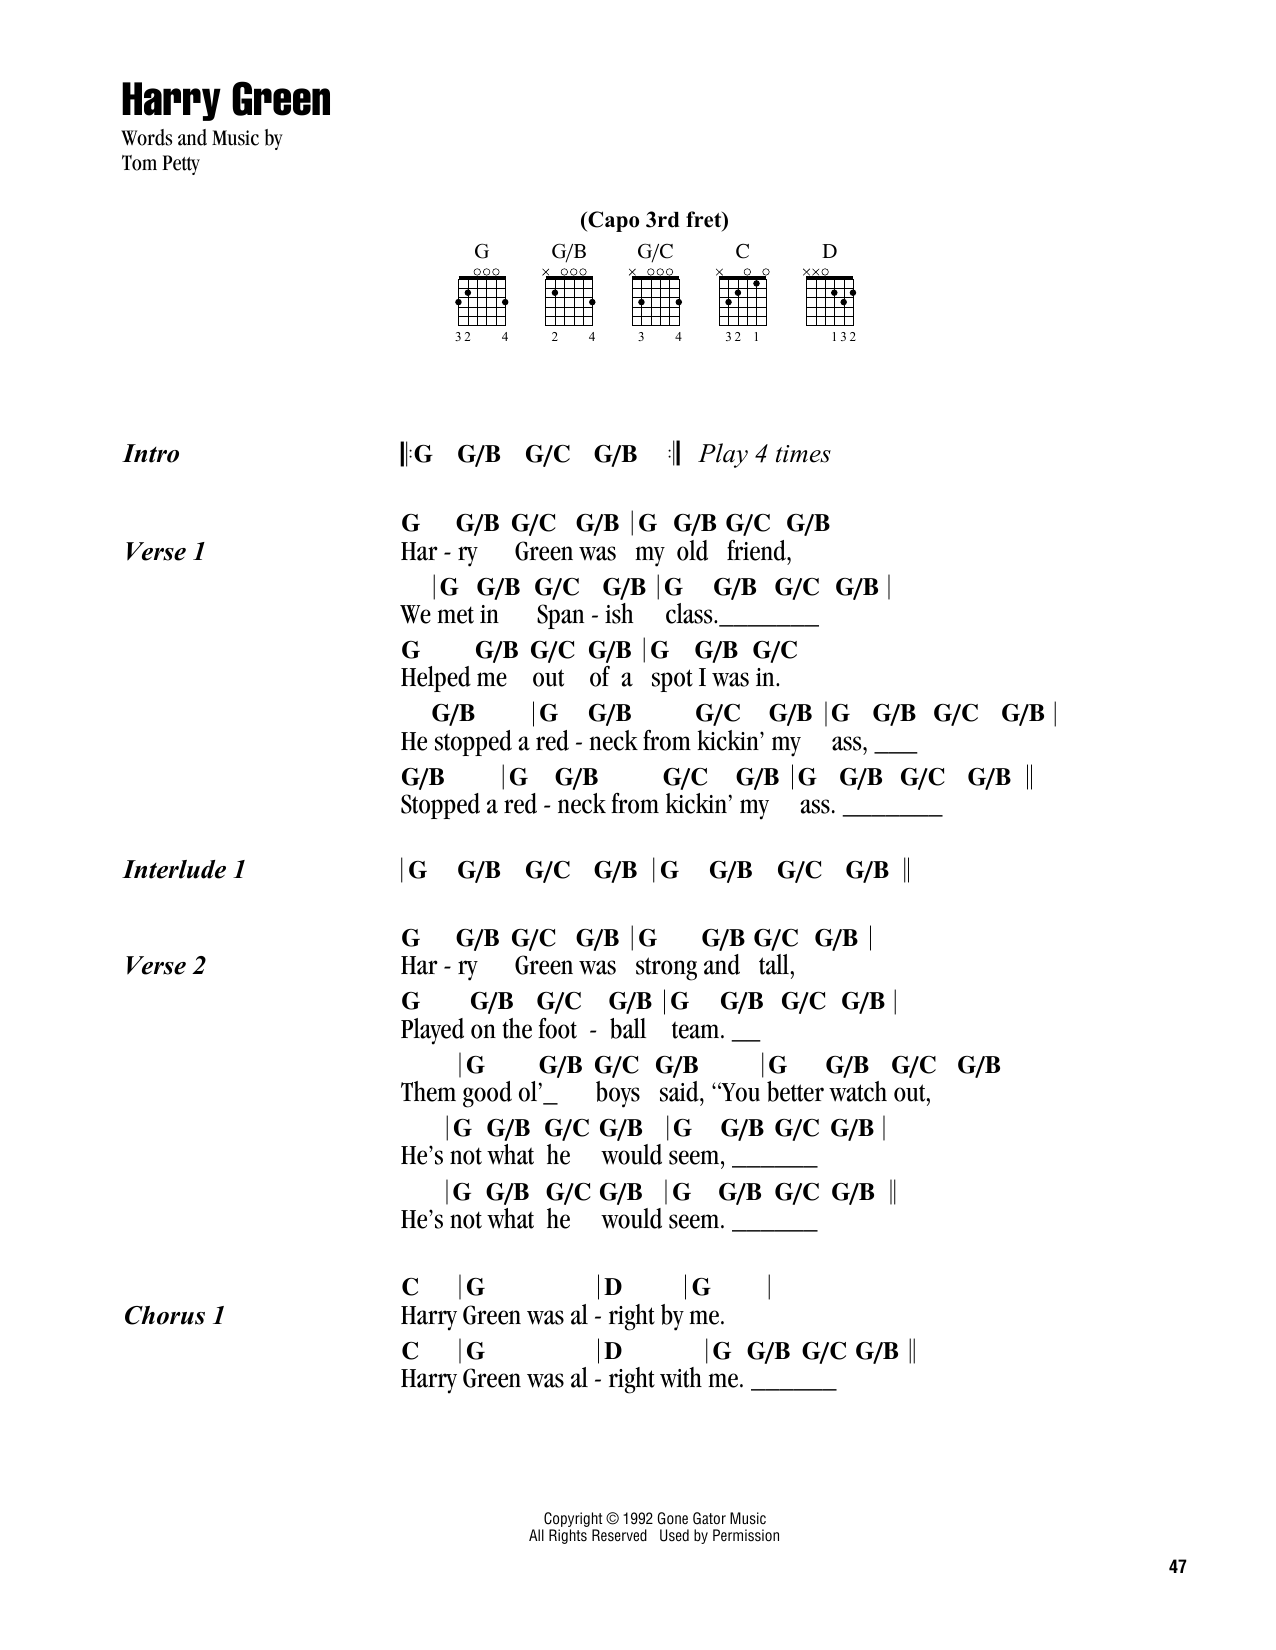 Tom Petty Harry Green Sheet Music Notes & Chords for Guitar Chords/Lyrics - Download or Print PDF